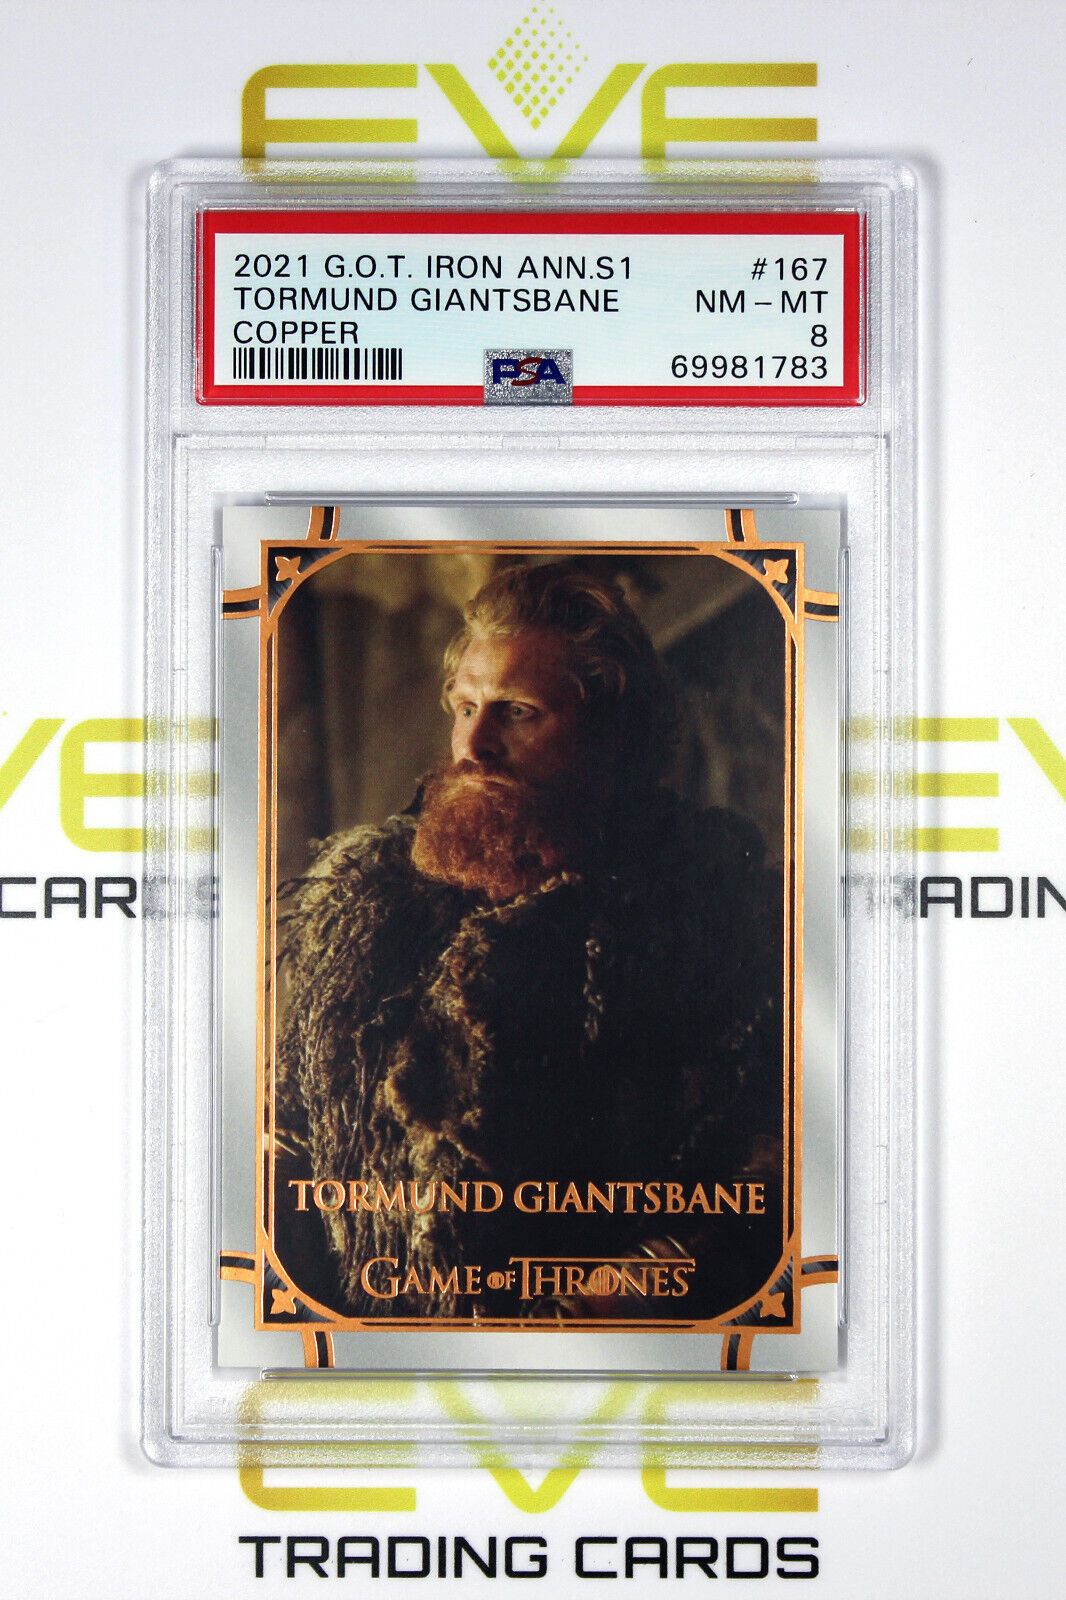 Graded Game of Thrones Card - #167 2021 Tormund Giantsbane - Copper /199 - PSA 8